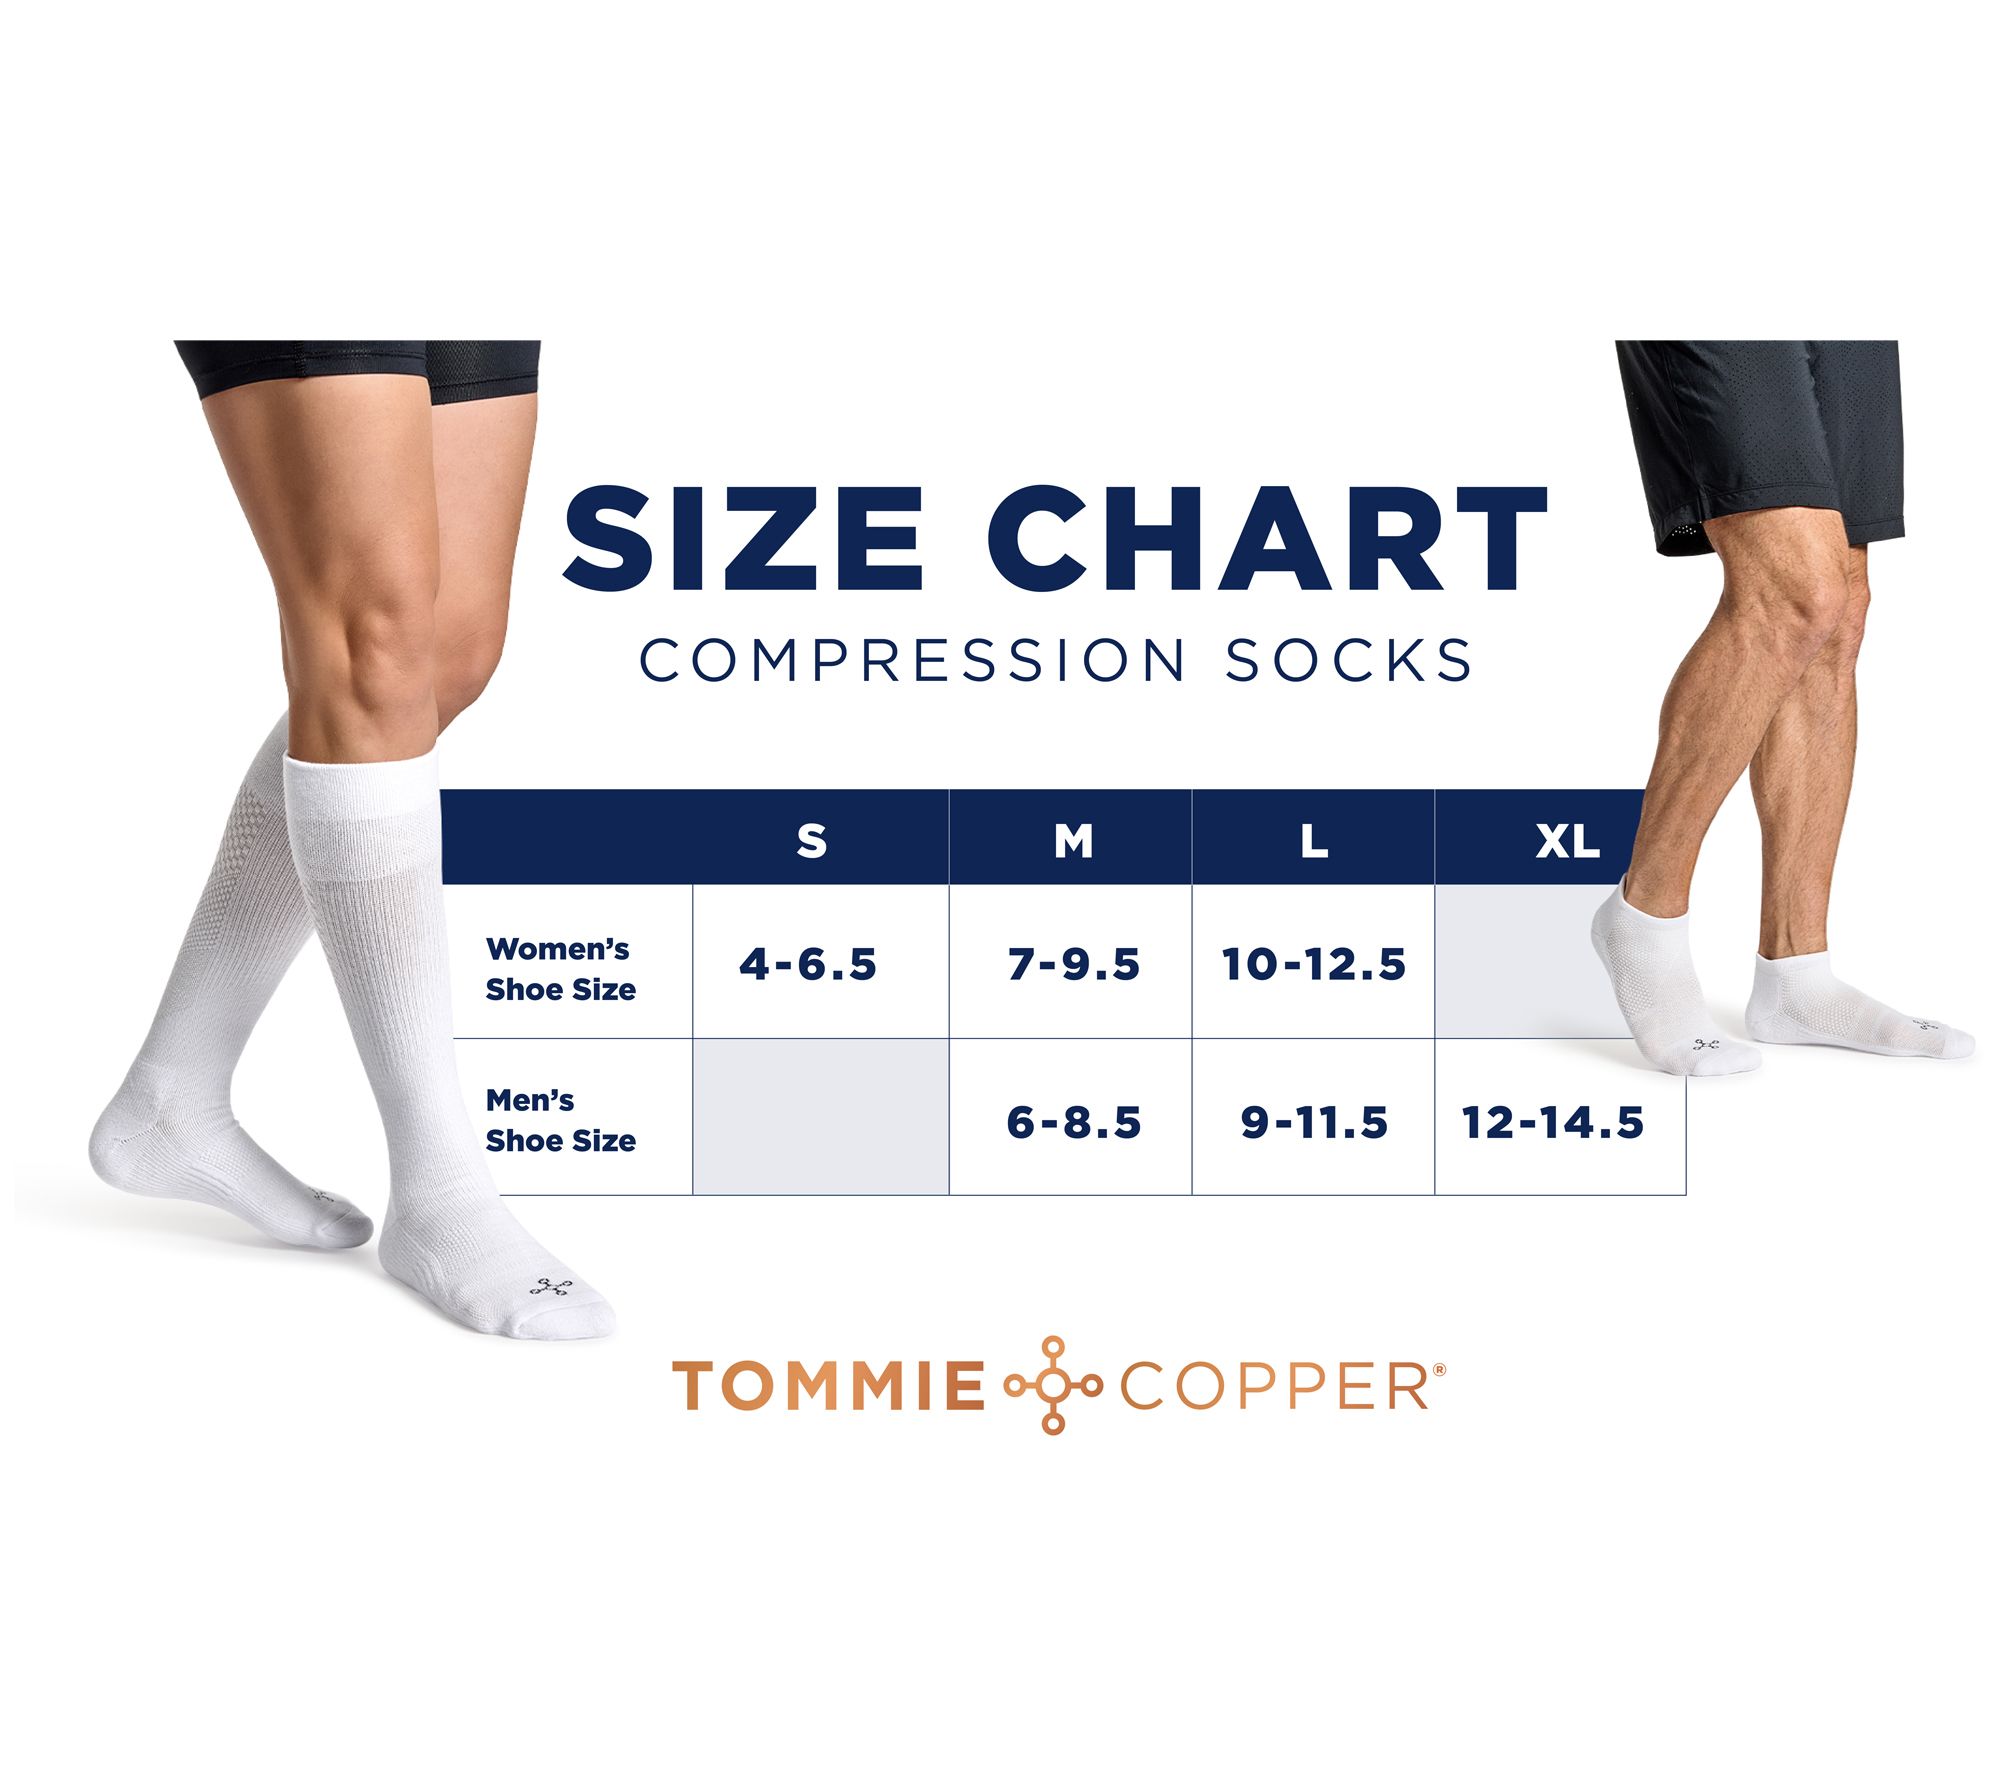 Tommie Copper Sport Compression Low Cut Socks, 3-Pack, Black, Small/Medium